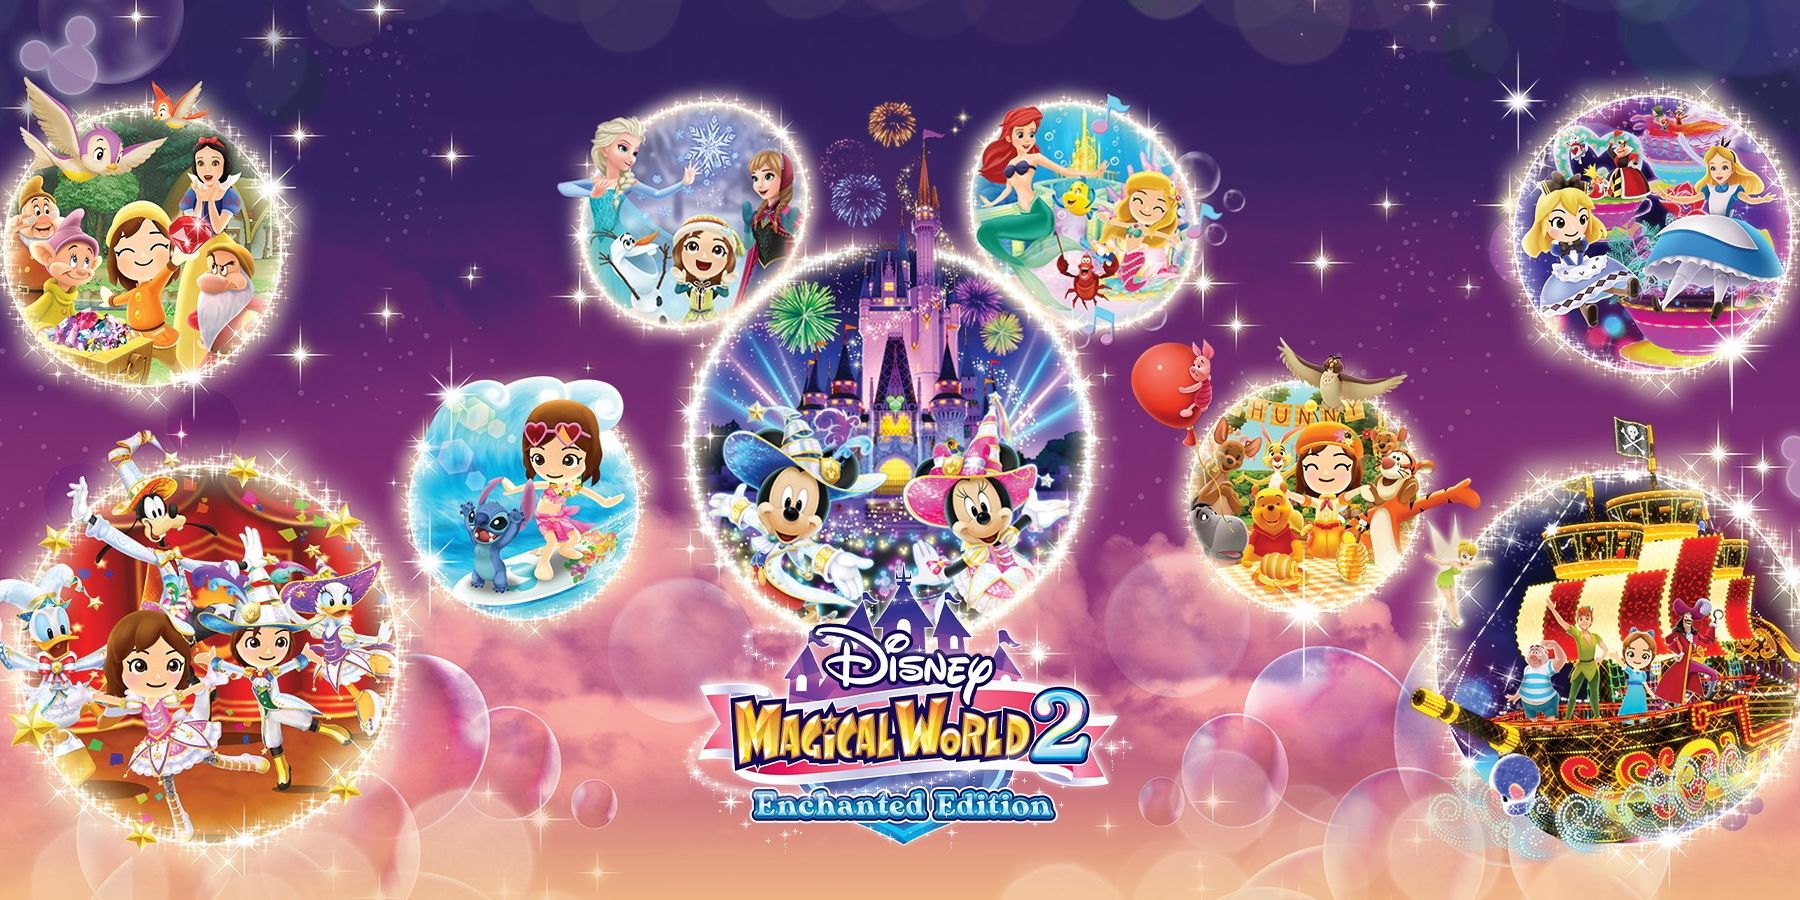 Disney Magical World 2 : Enchanted Edition이 올해 스위치에 올 수 있습니다.